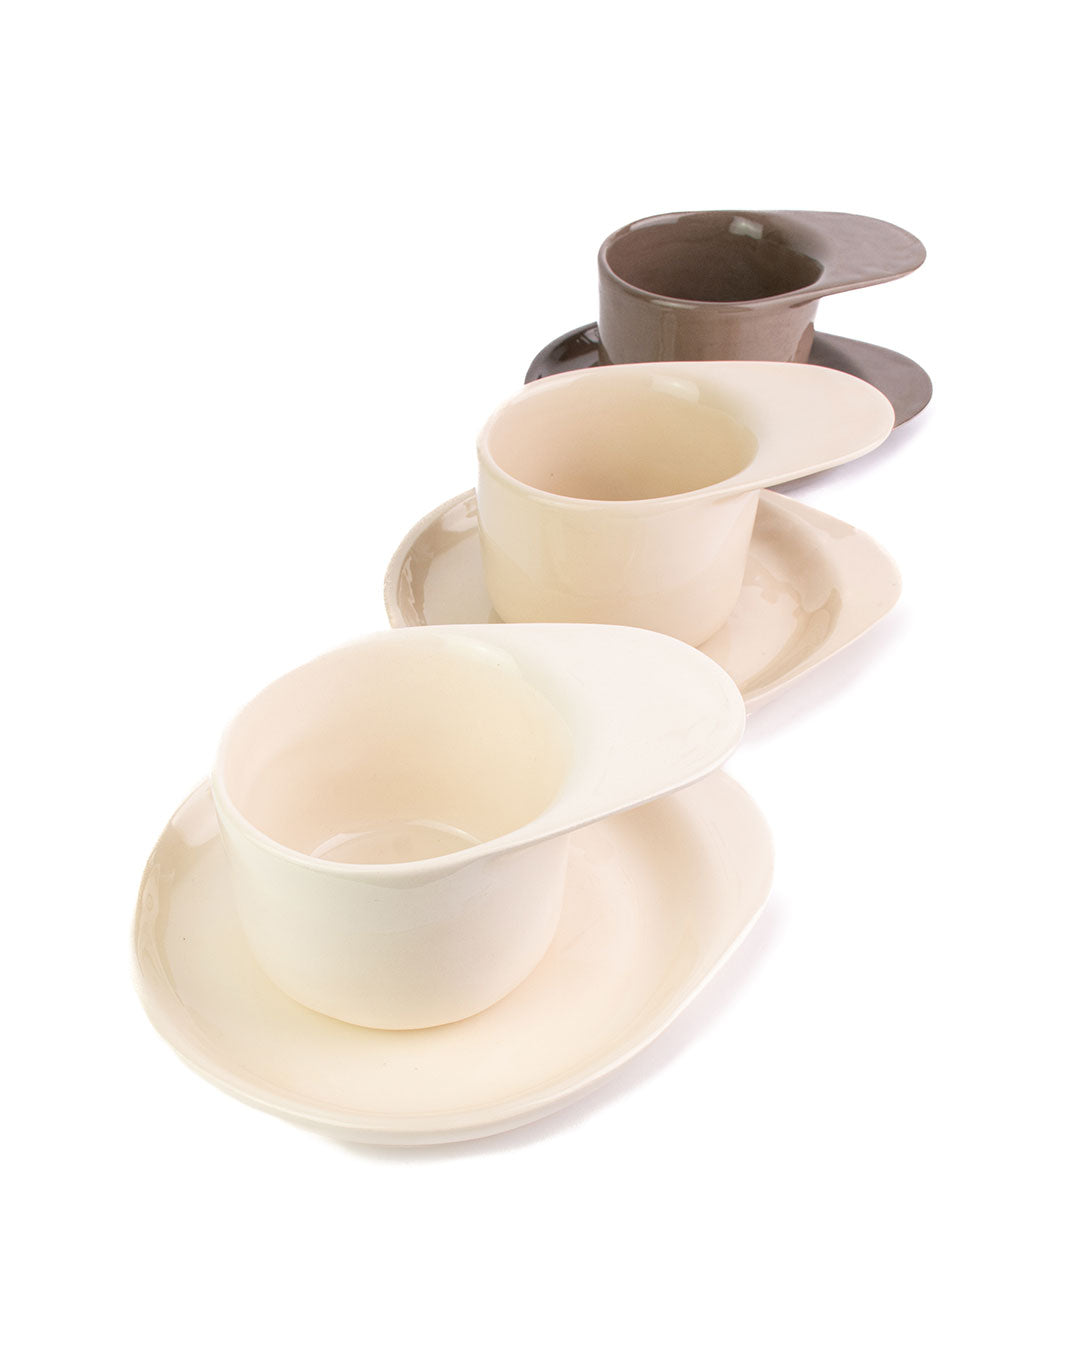 Ameno Espresso Cups with Plate_pottery_nu ceramica